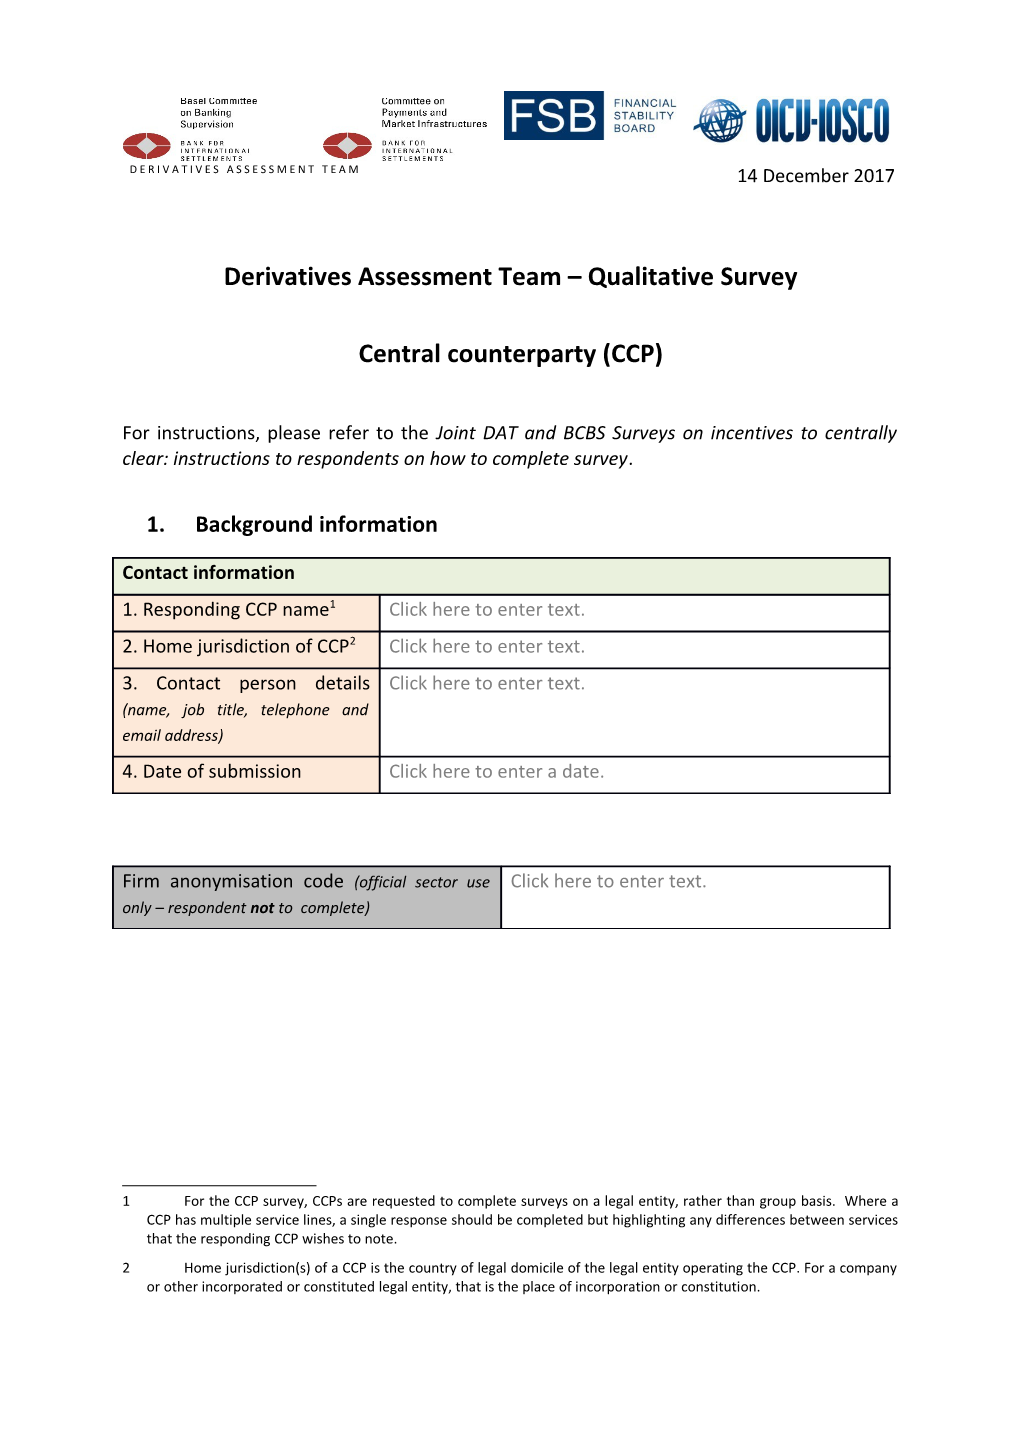 Derivatives Assessment Team Qualitative Survey